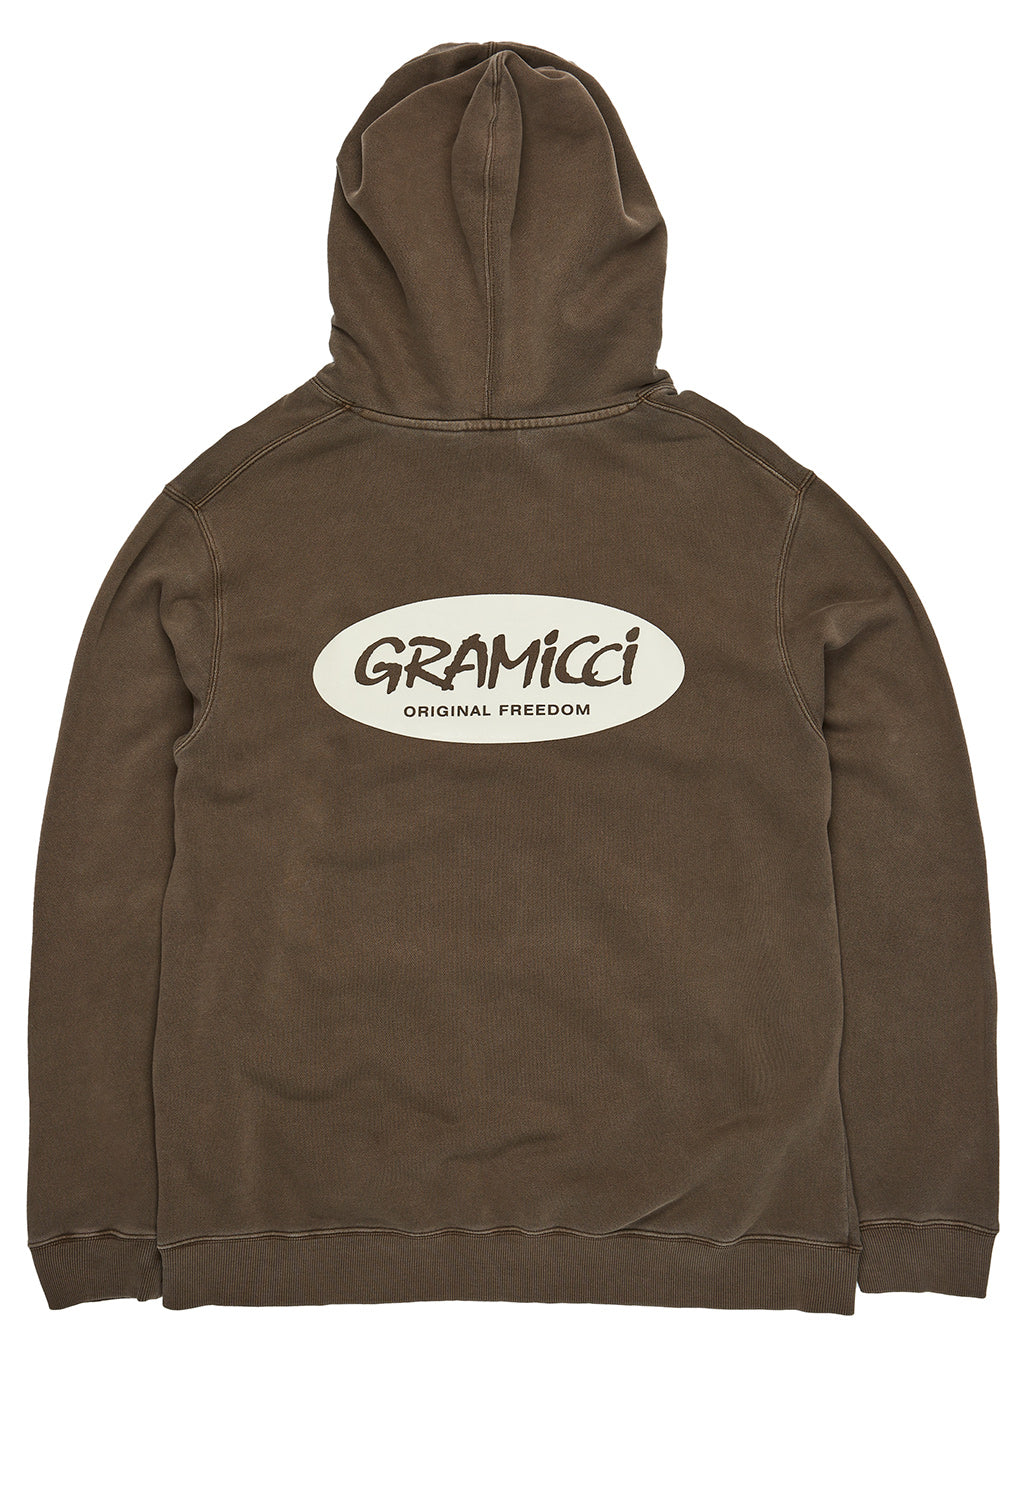 Gramicci Original Freedom Oval Hooded Sweatshirt - Brown Pigment